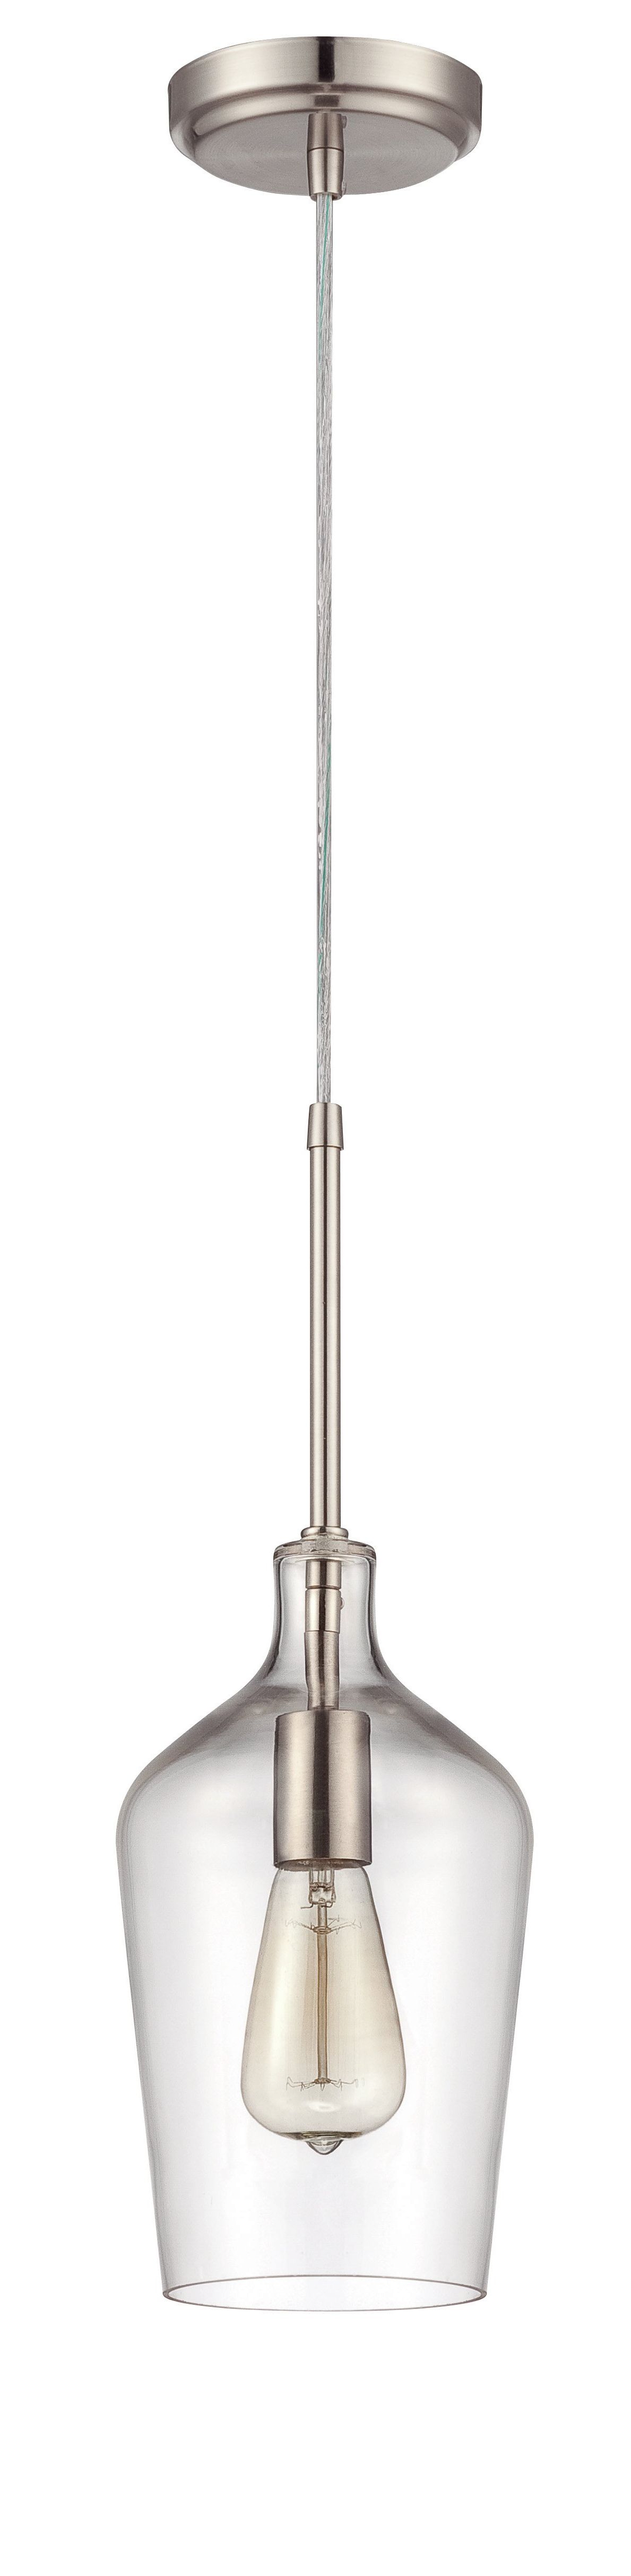 Giacinta 1 Light Single Bell Pendants Inside Widely Used Oakhill 1 Light Single Bell Pendant (View 18 of 25)